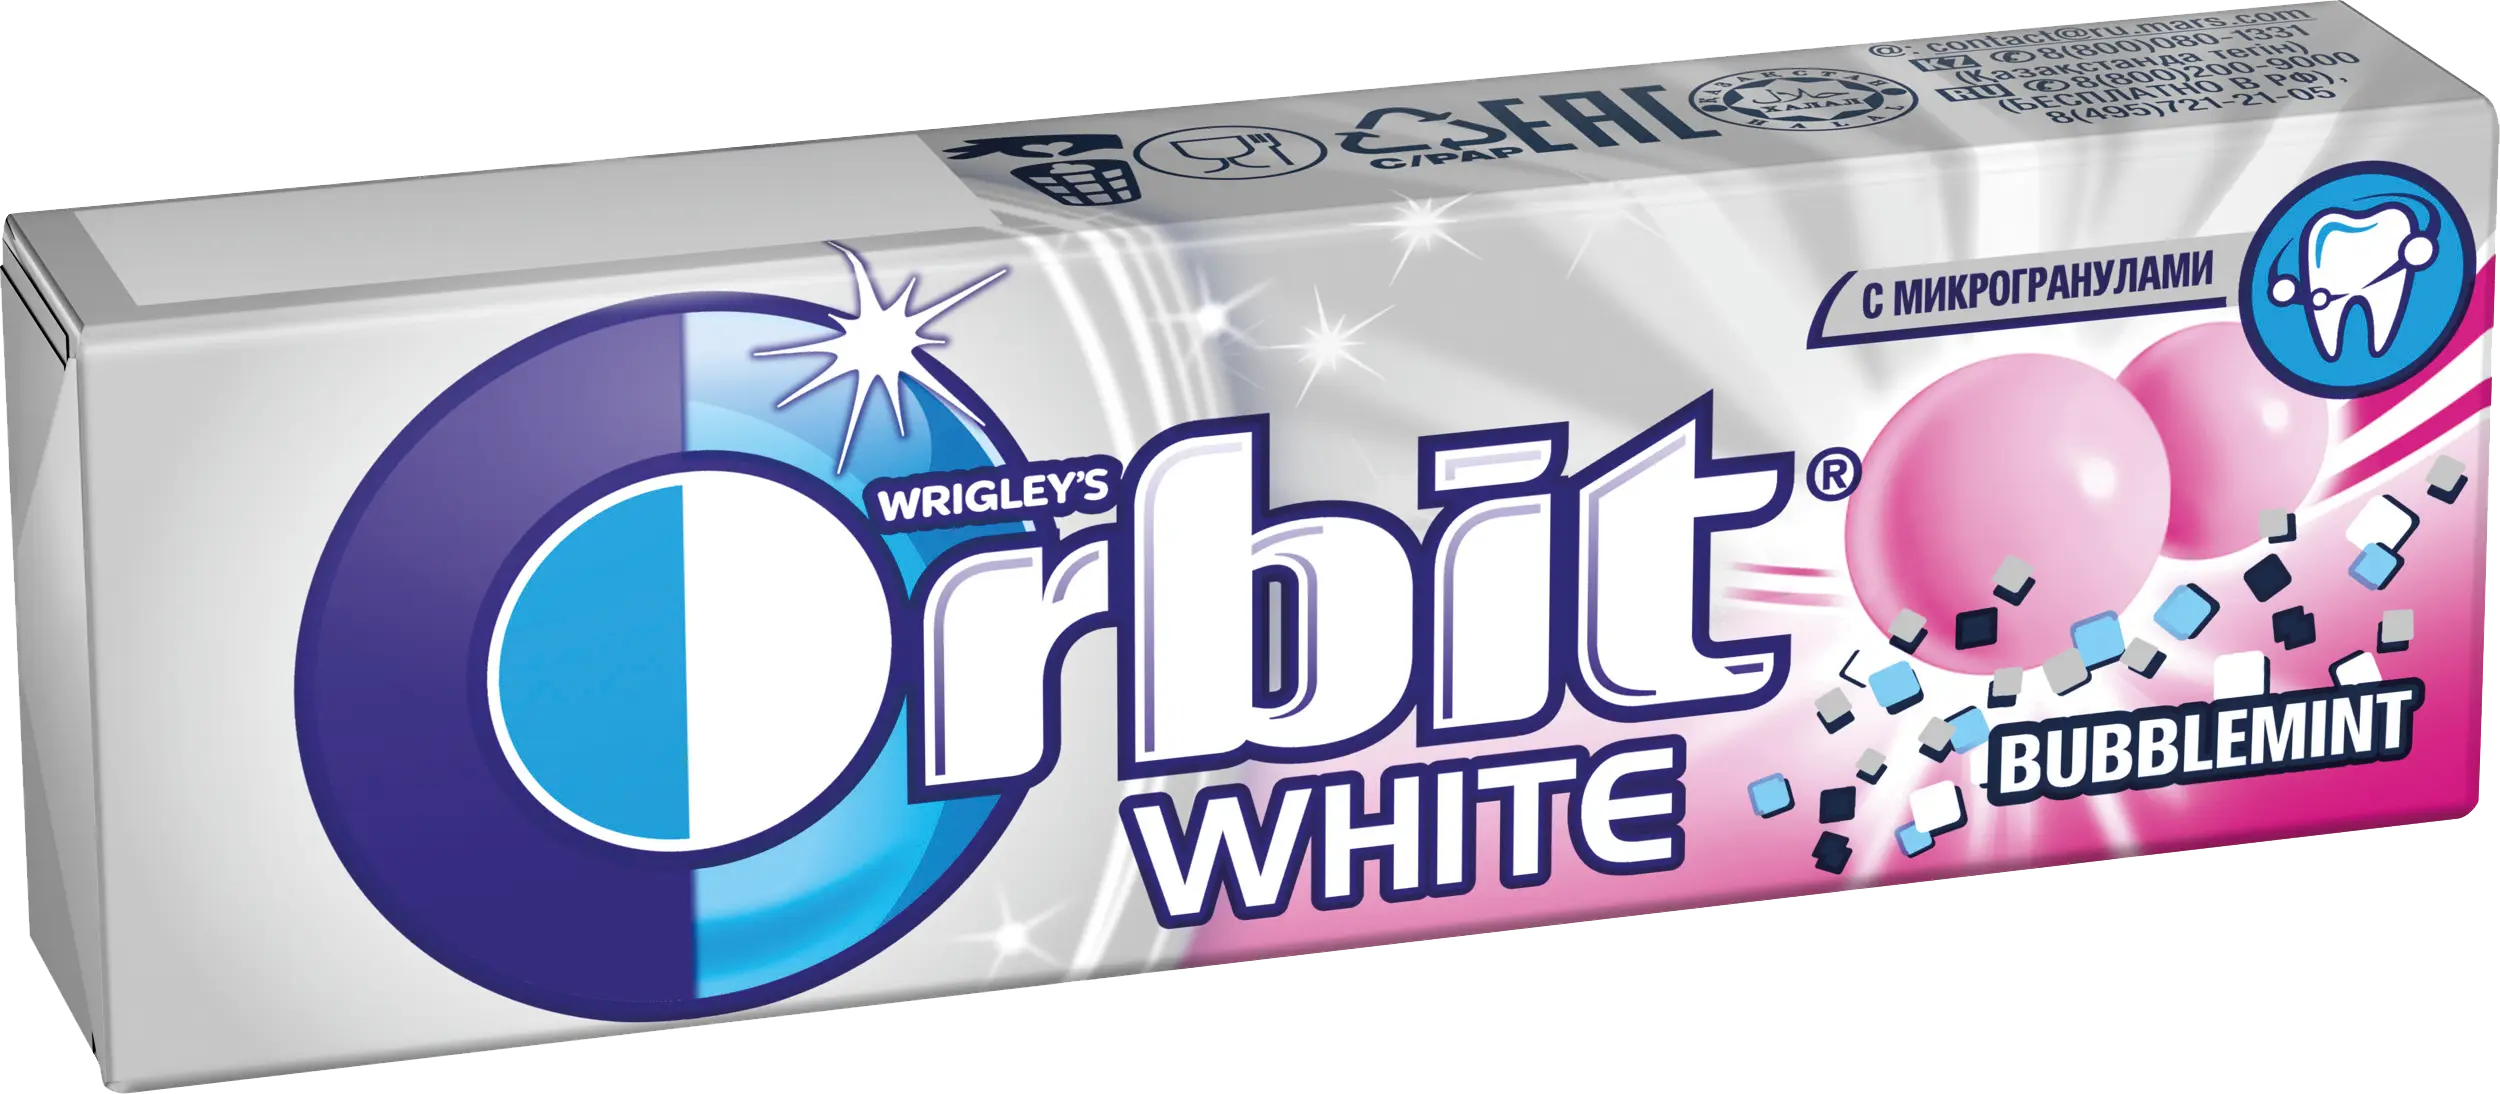 Orbit bubblemint. Жевательная резинка Orbit White Bubblemint, 13,6г. Orbit White Bubblemint 13,6 г. Орбит жевательная резинка баблминт 13.6. Резинка жевательная Orbit баблминт, 13.6г.